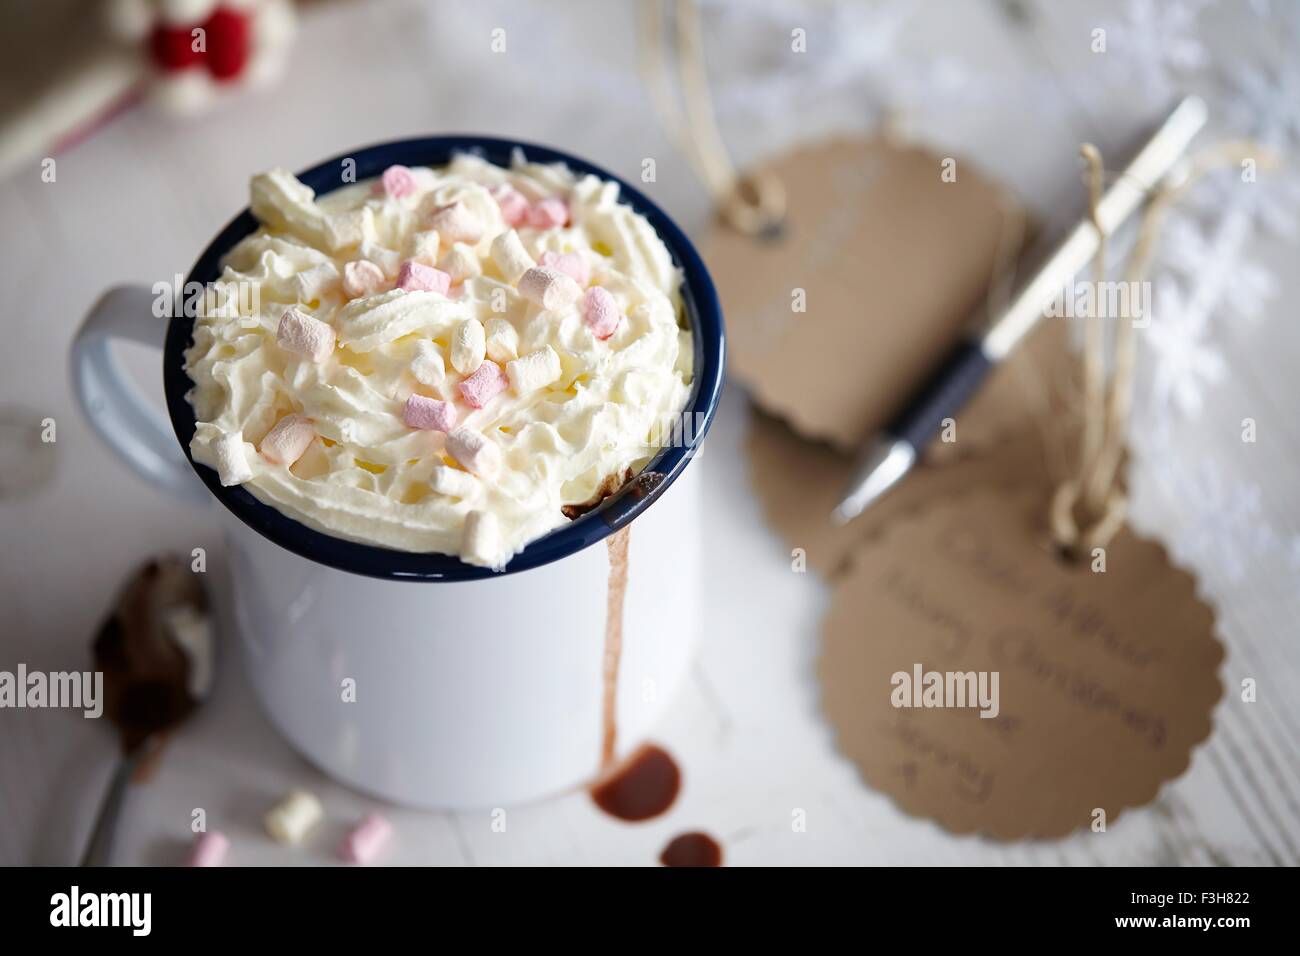 Marshmallow in hot chocolate Stock Photo